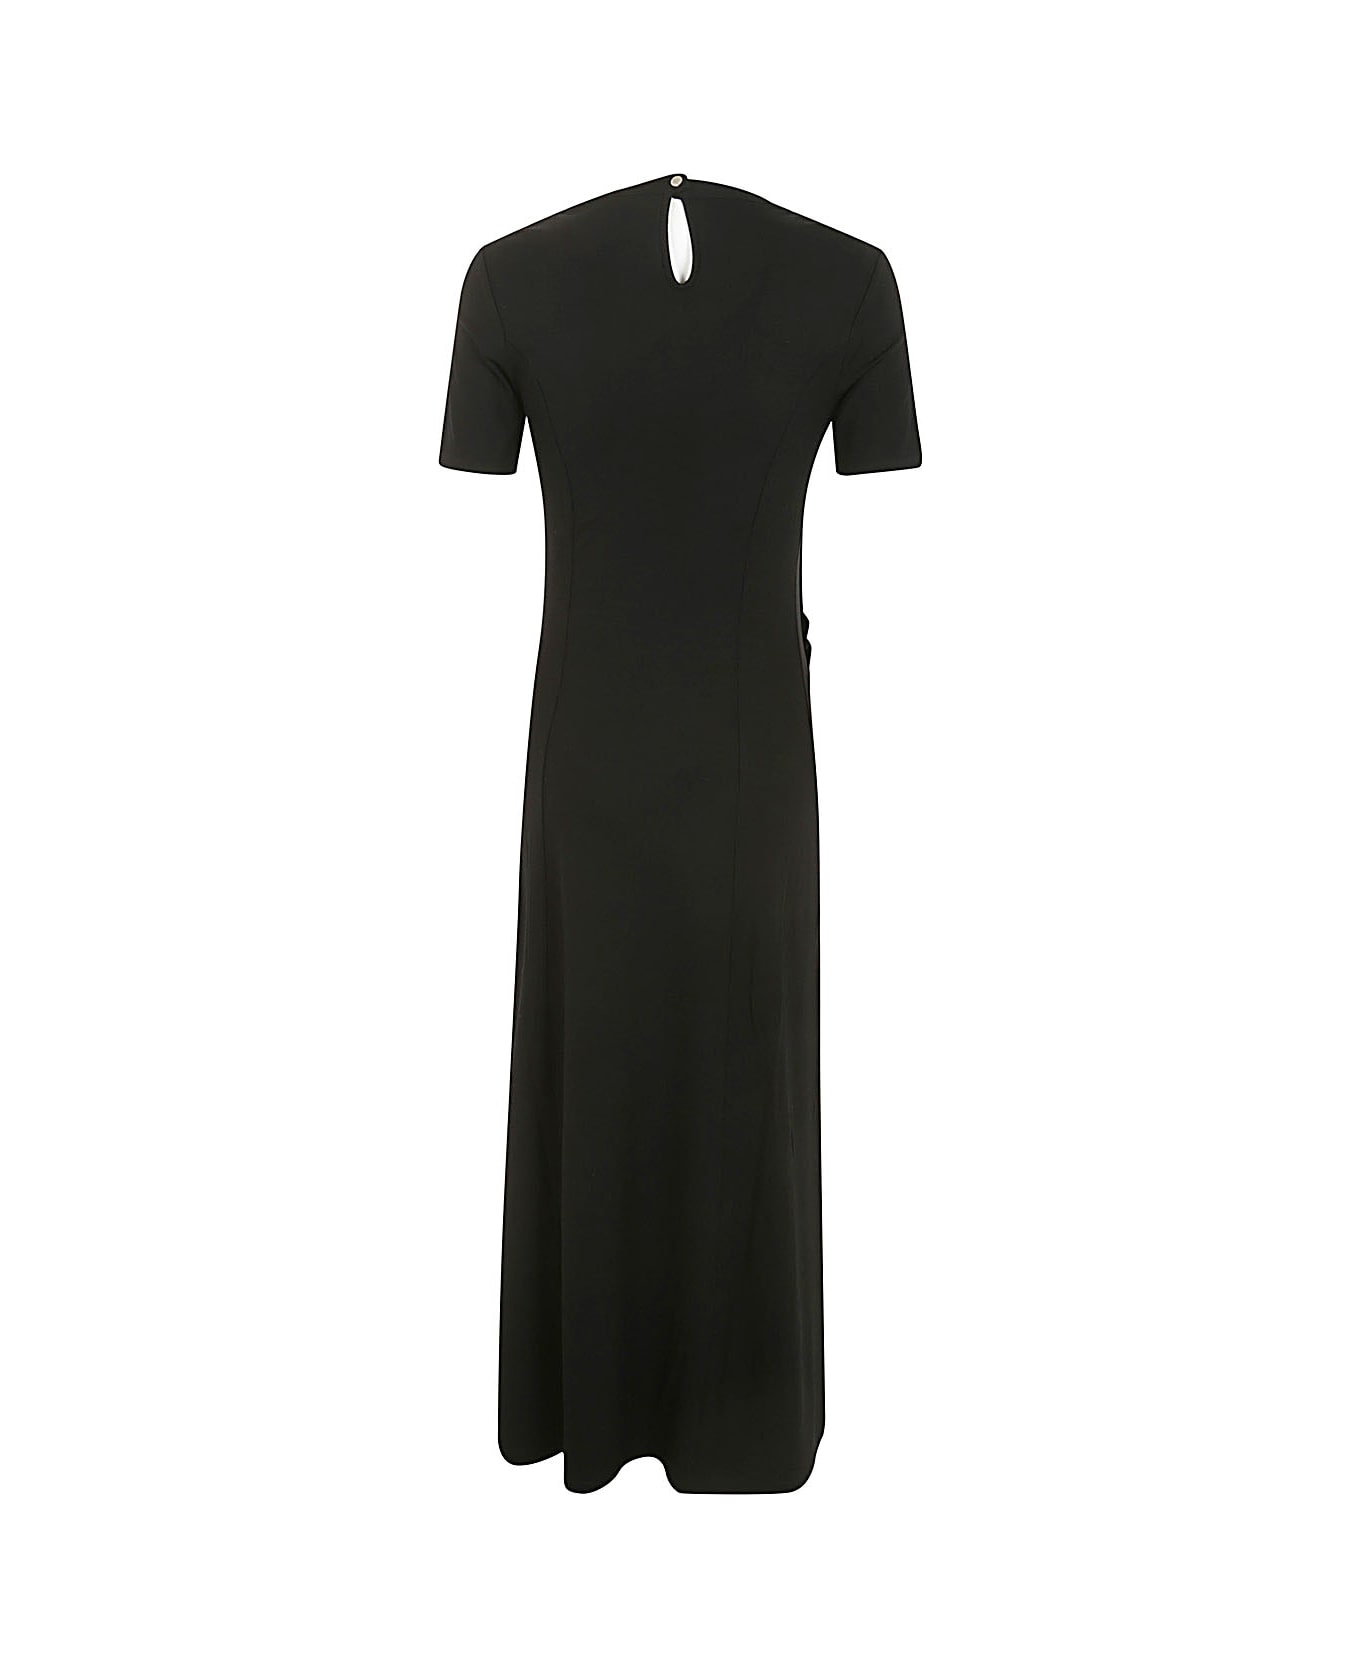 Paco Rabanne Light Jersey Dress - Black